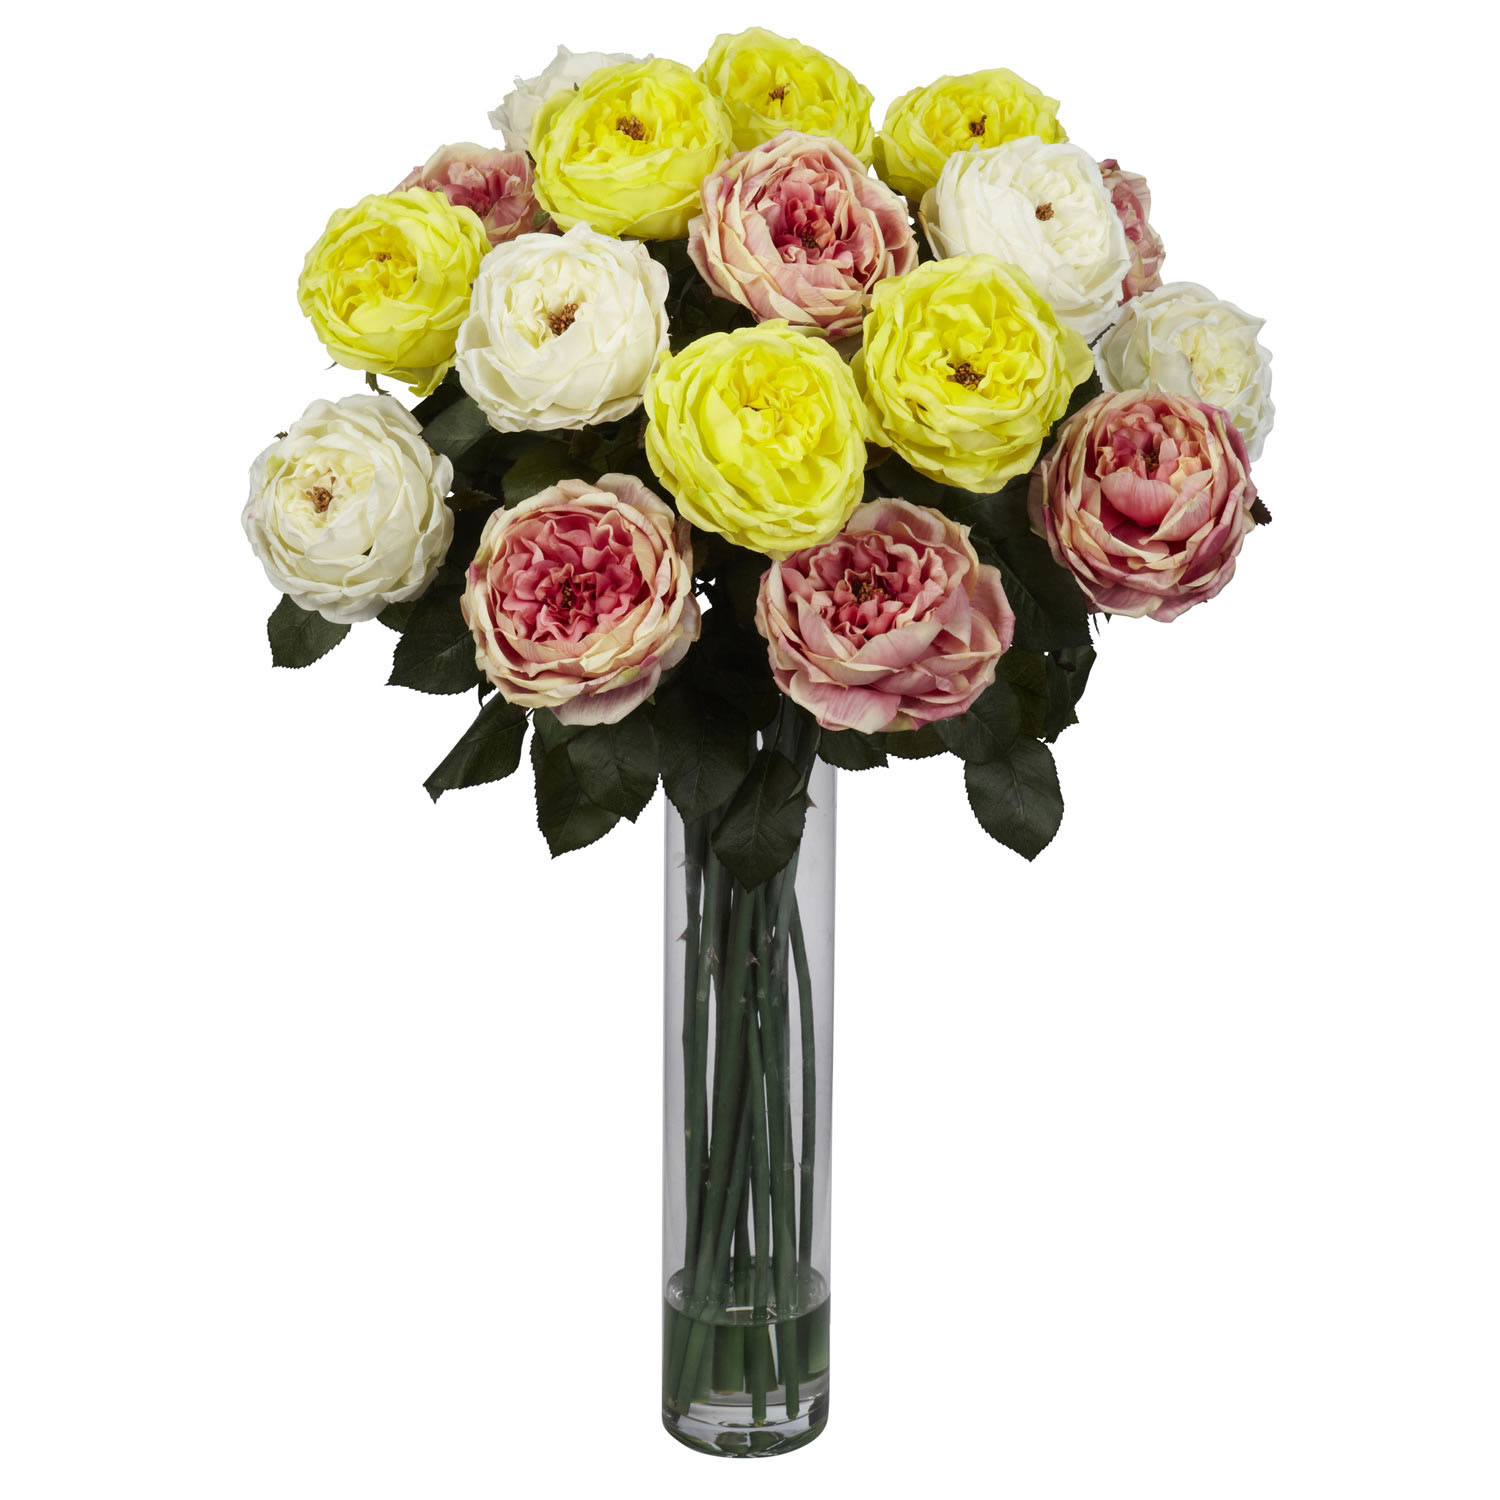 31 Inch Fancy Rose Silk Flower Arrangement In Decorative Glass Vase